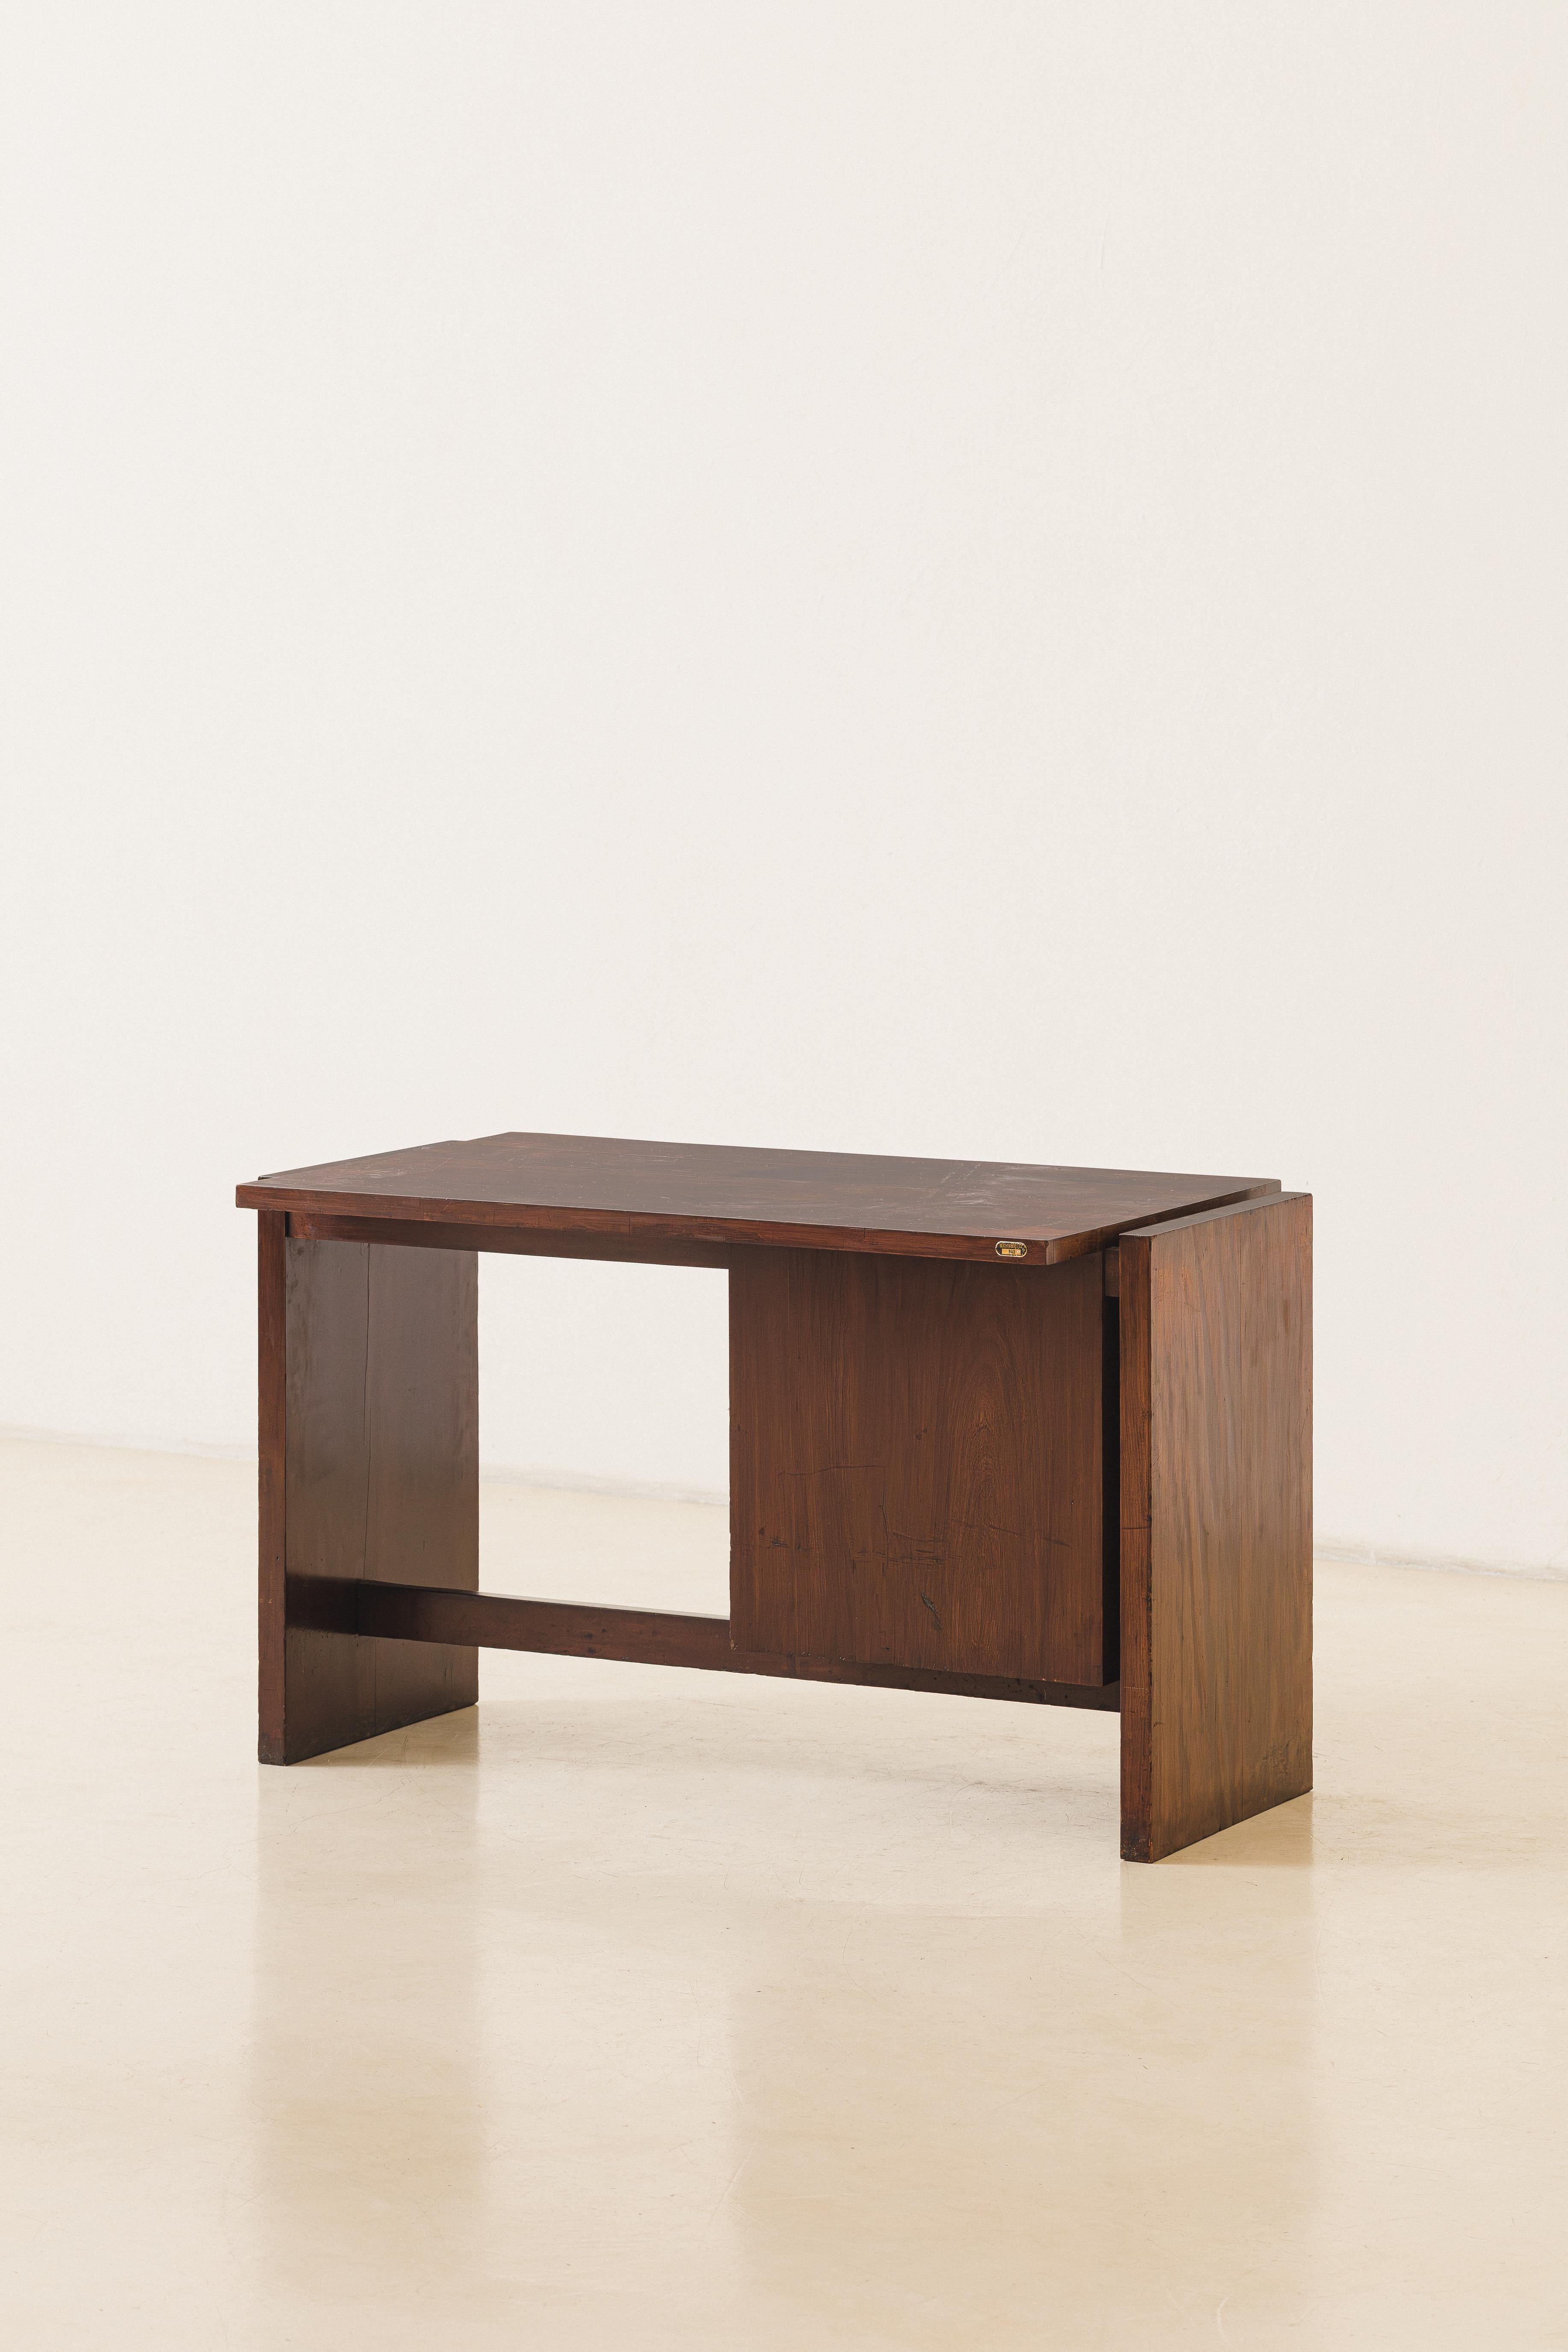 Rosewood Desk Brazilian Midcentury Design by Joaquim Tenreiro, 1960s  For Sale 1